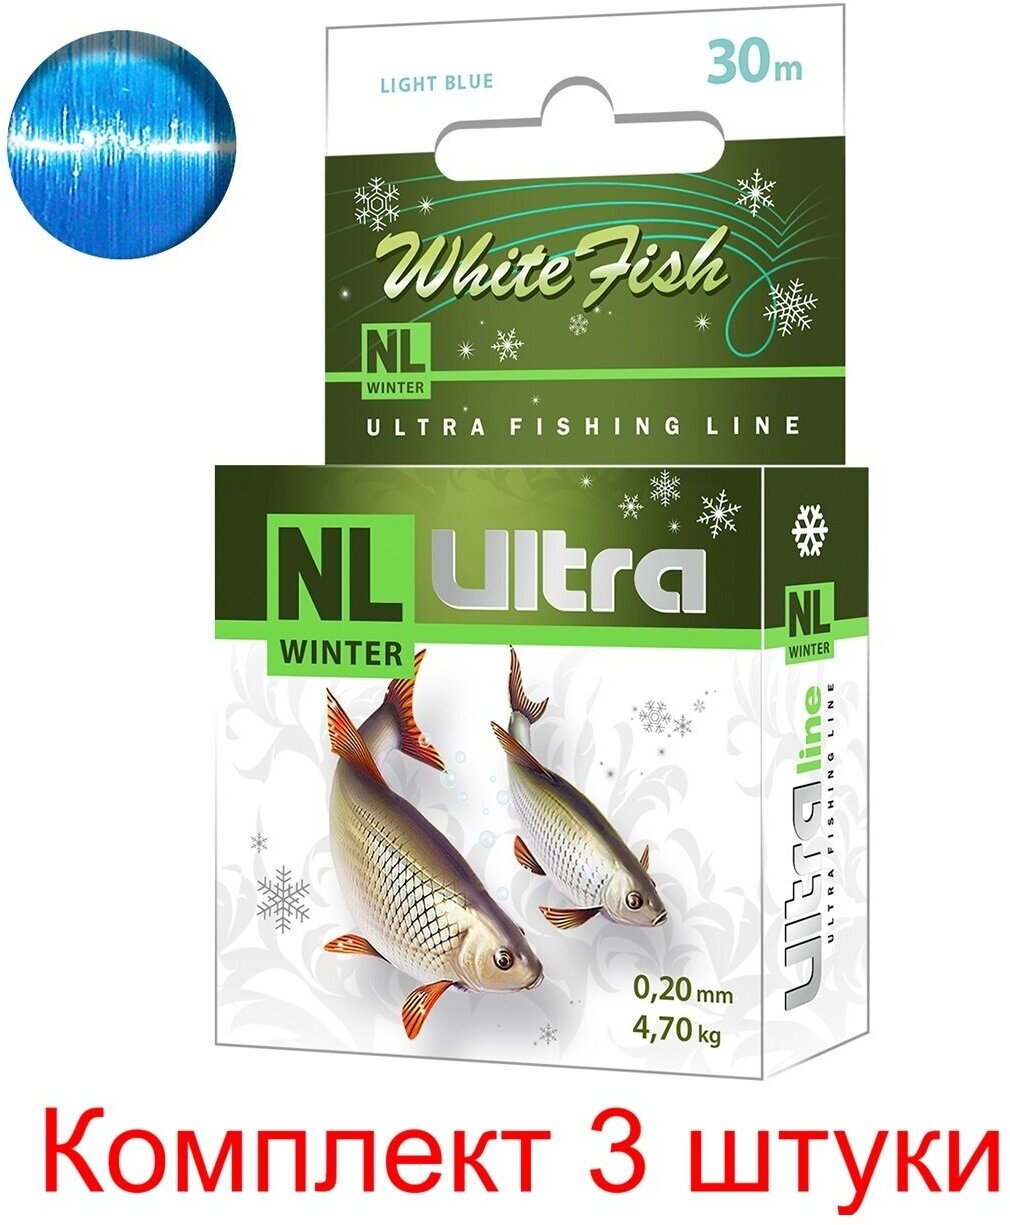 Леска зимняя для рыбалки AQUA NL ULTRA WHITE FISH (Белая рыба) 30m 0,20mm, цвет - светло-голубой, test - 4,70kg ( 3 штуки )